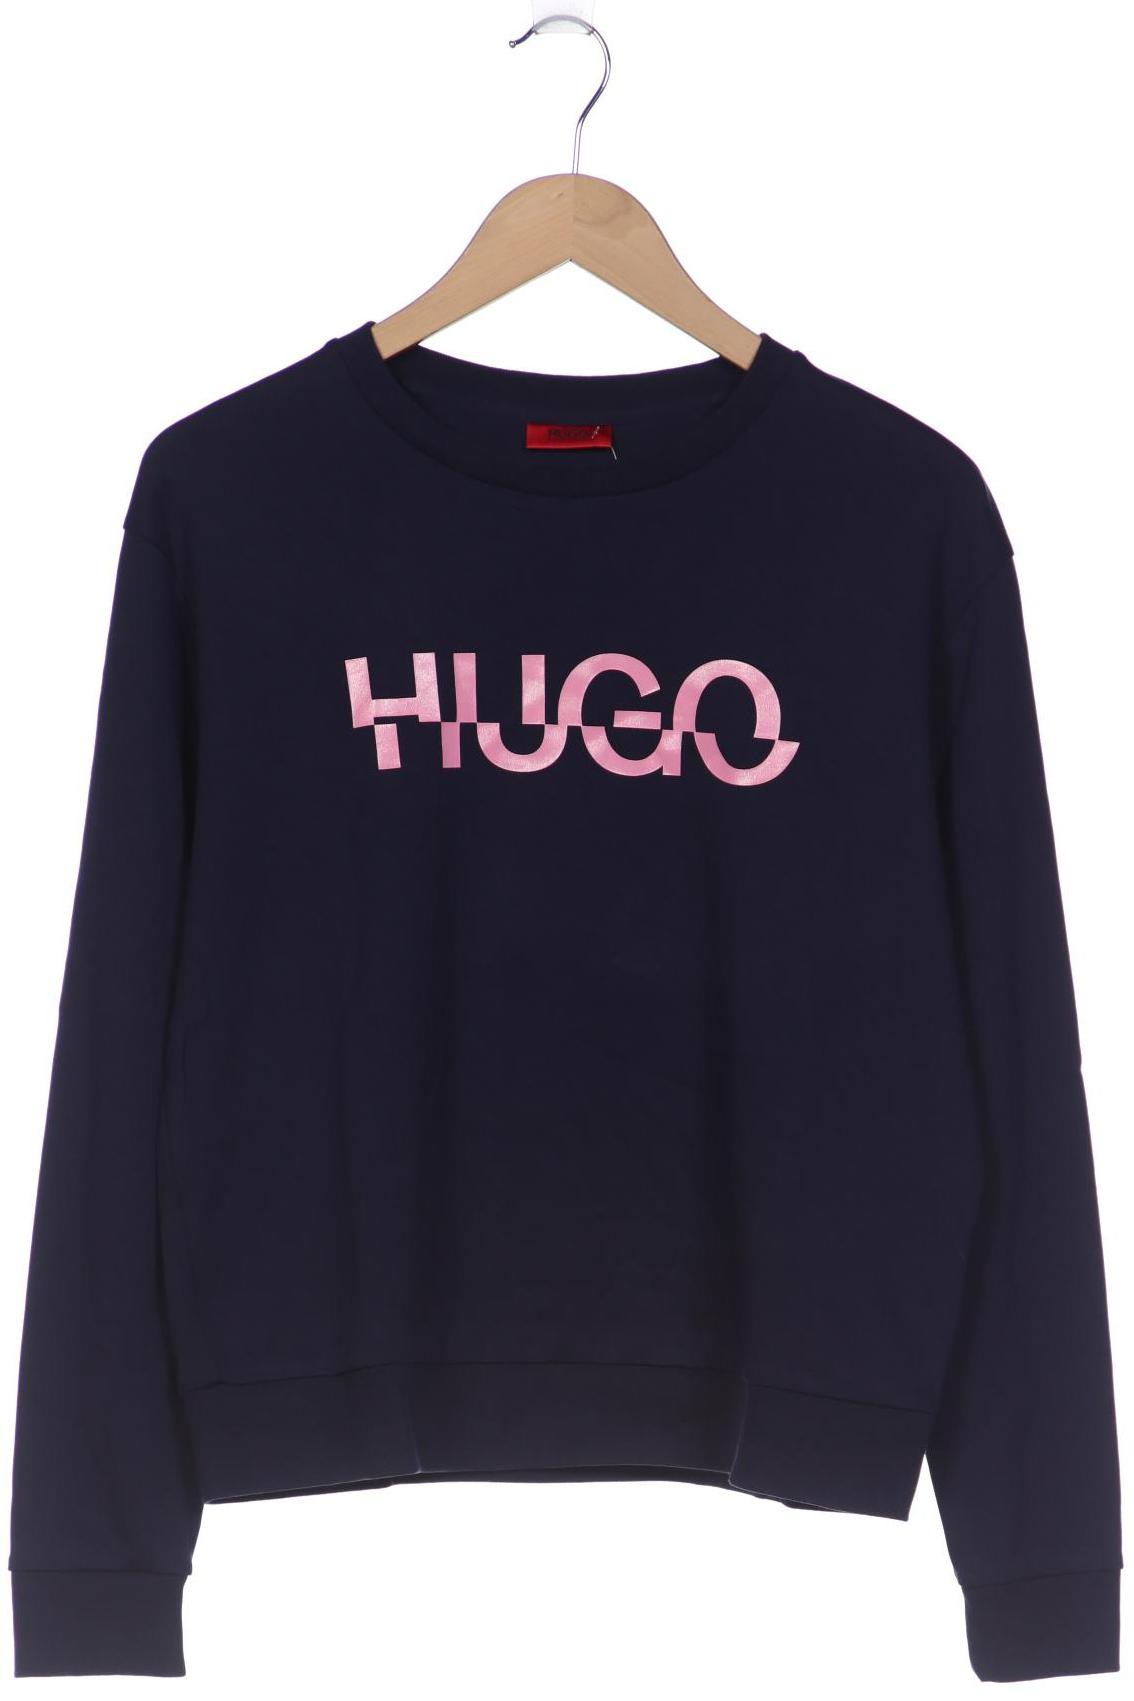 HUGO by Hugo Boss Damen Sweatshirt, marineblau von HUGO by Hugo Boss